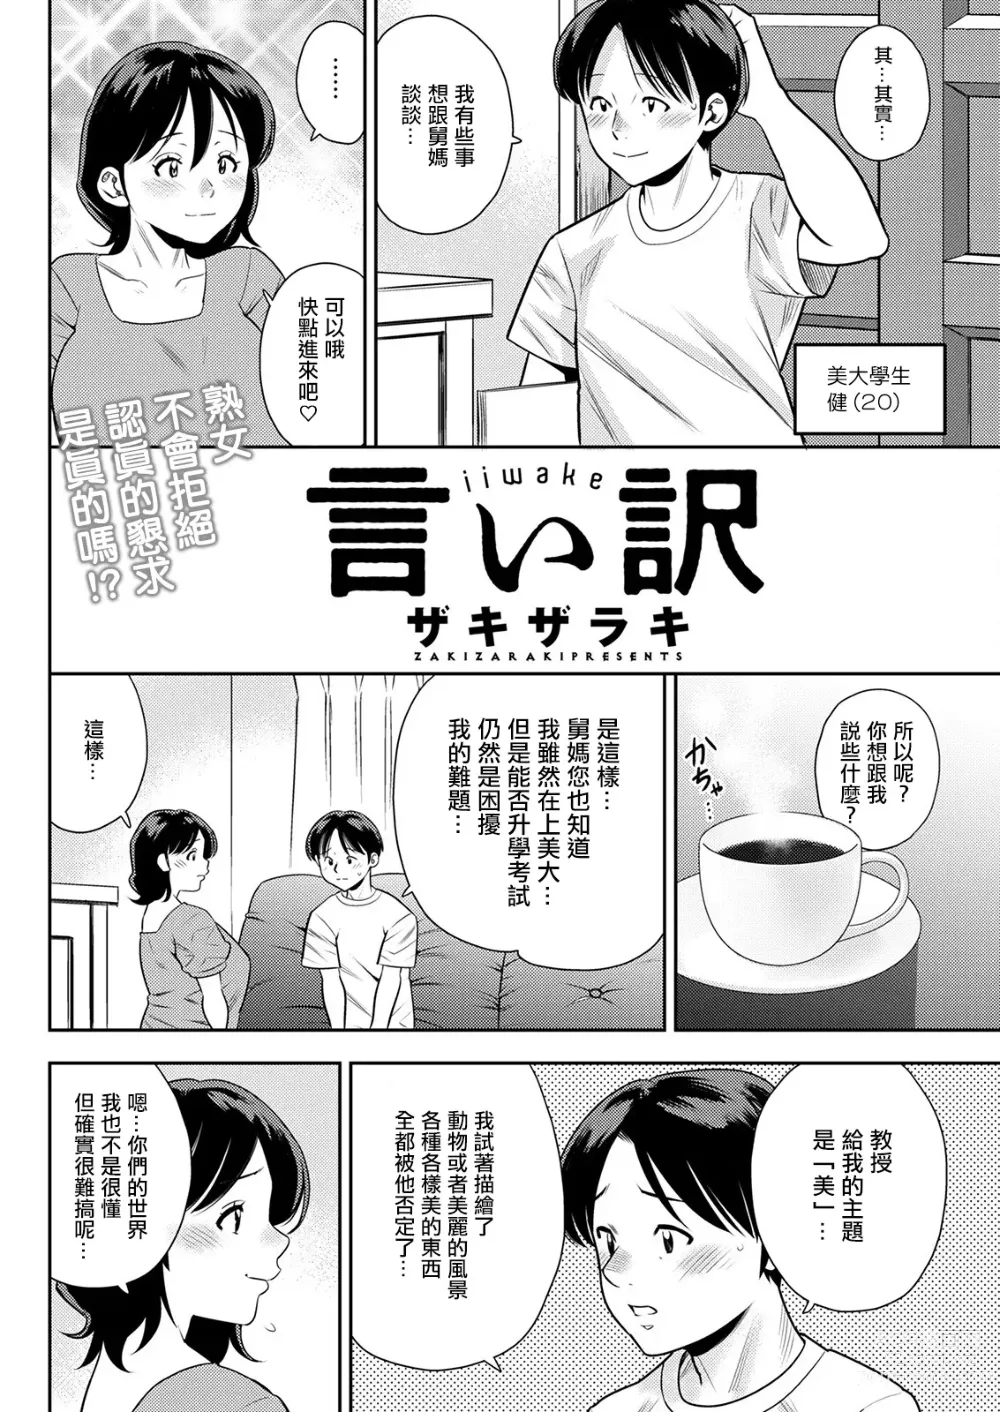 Page 2 of manga Iiwake